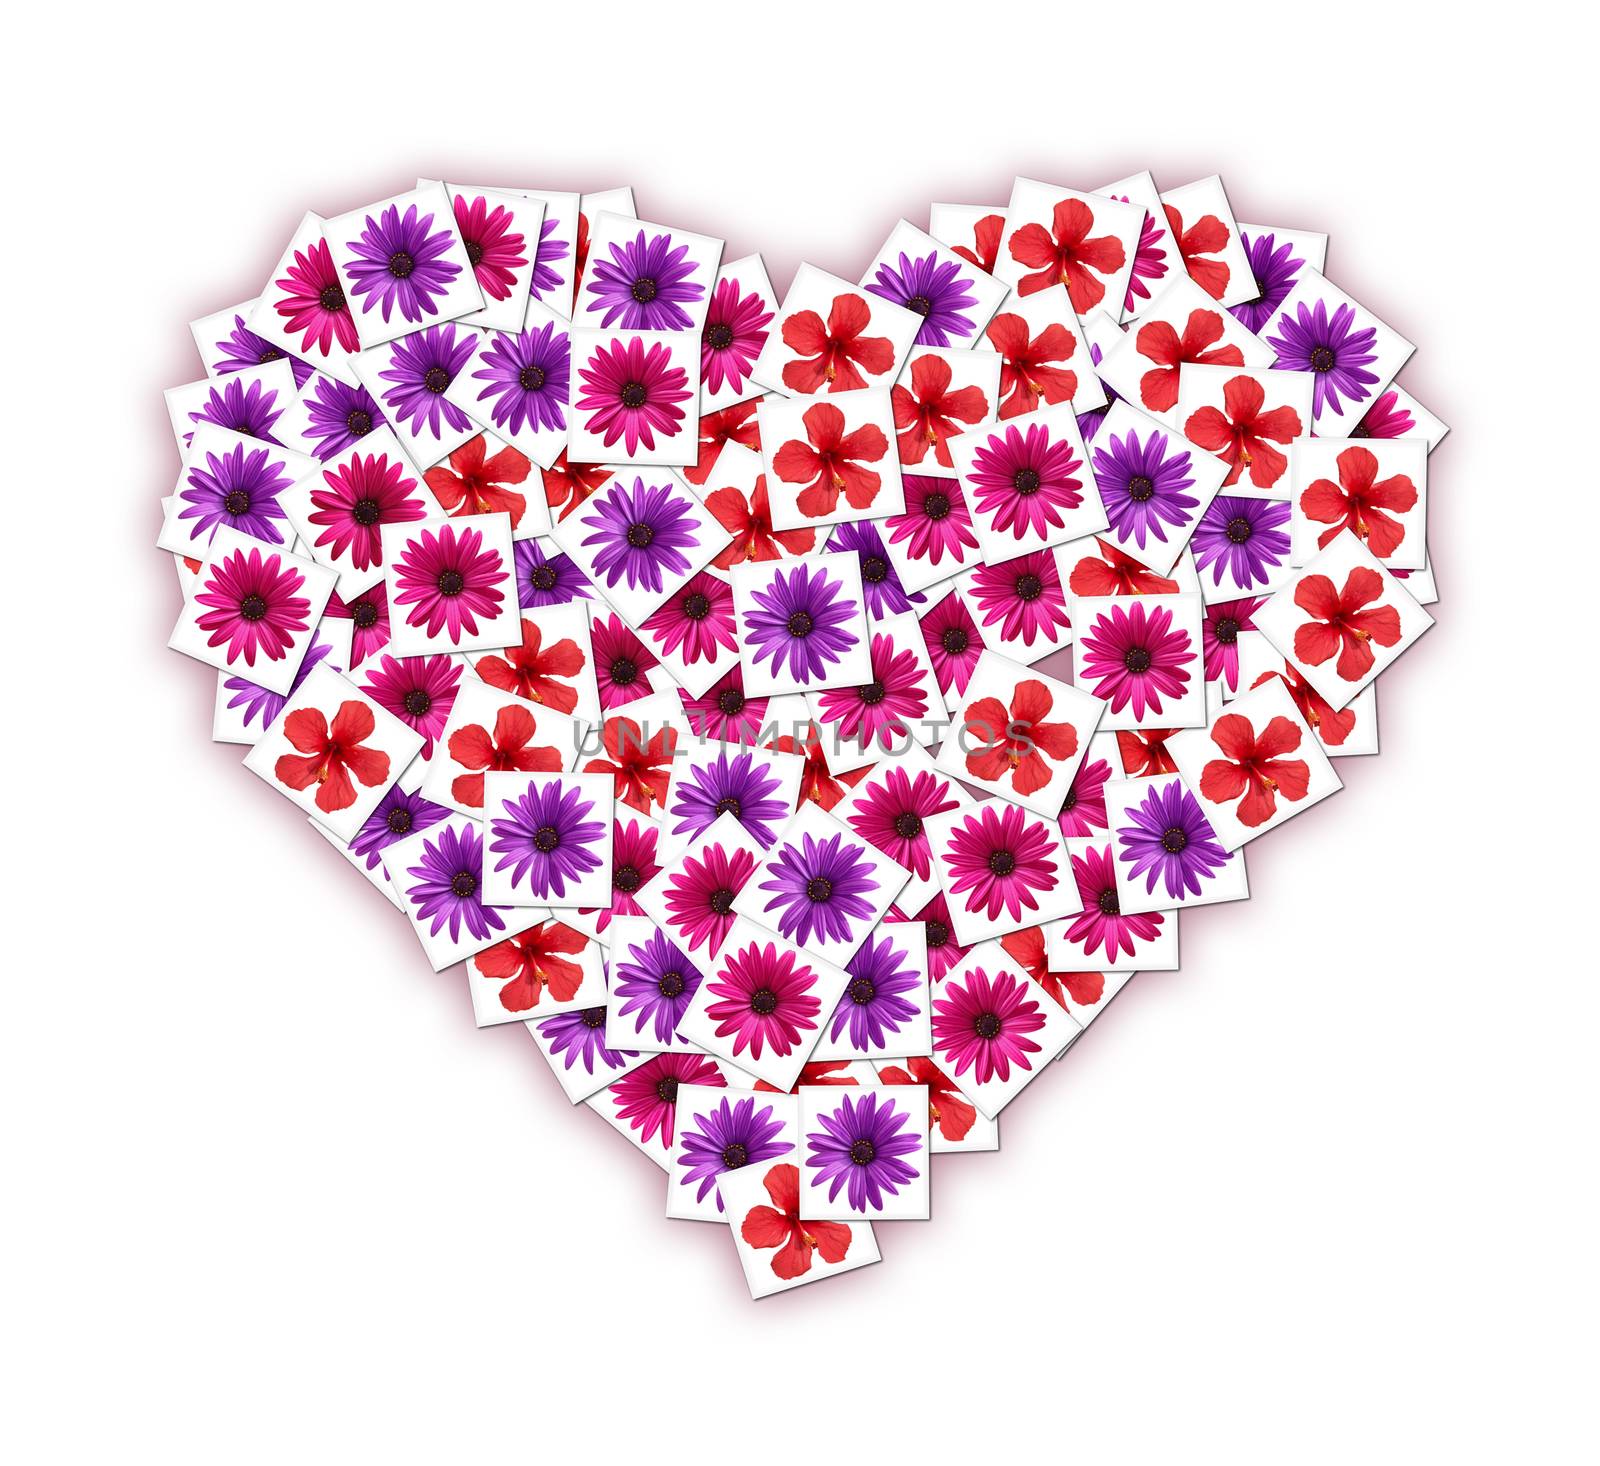 Collage of flowers in the shape of heart by fotoecho